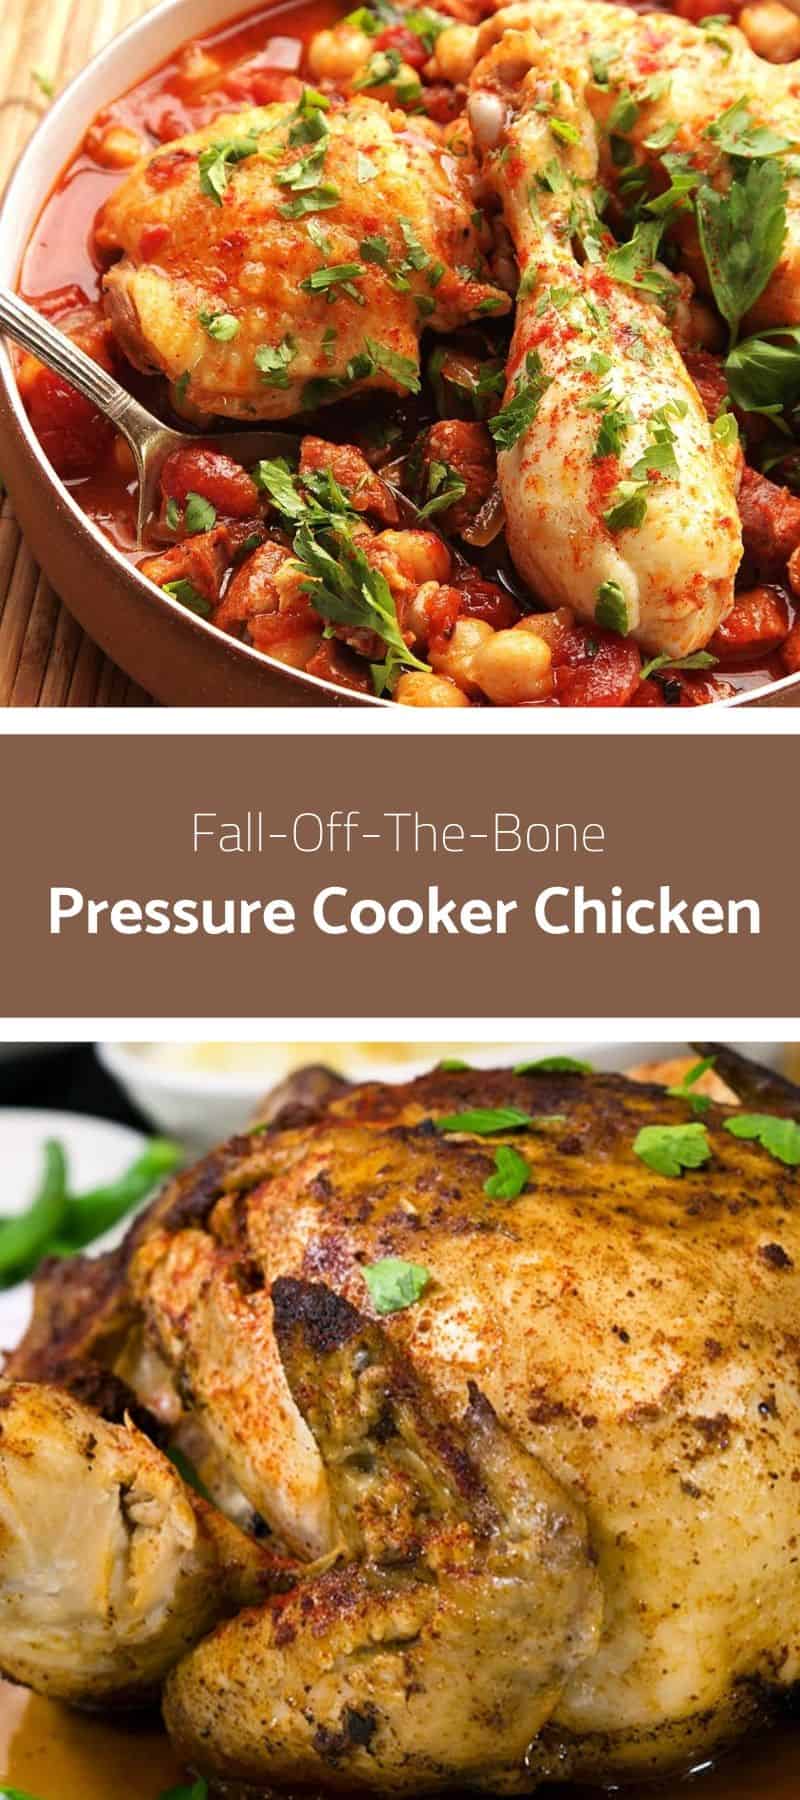 Fall-Off-The-Bone Pressure Cooker Chicken 3